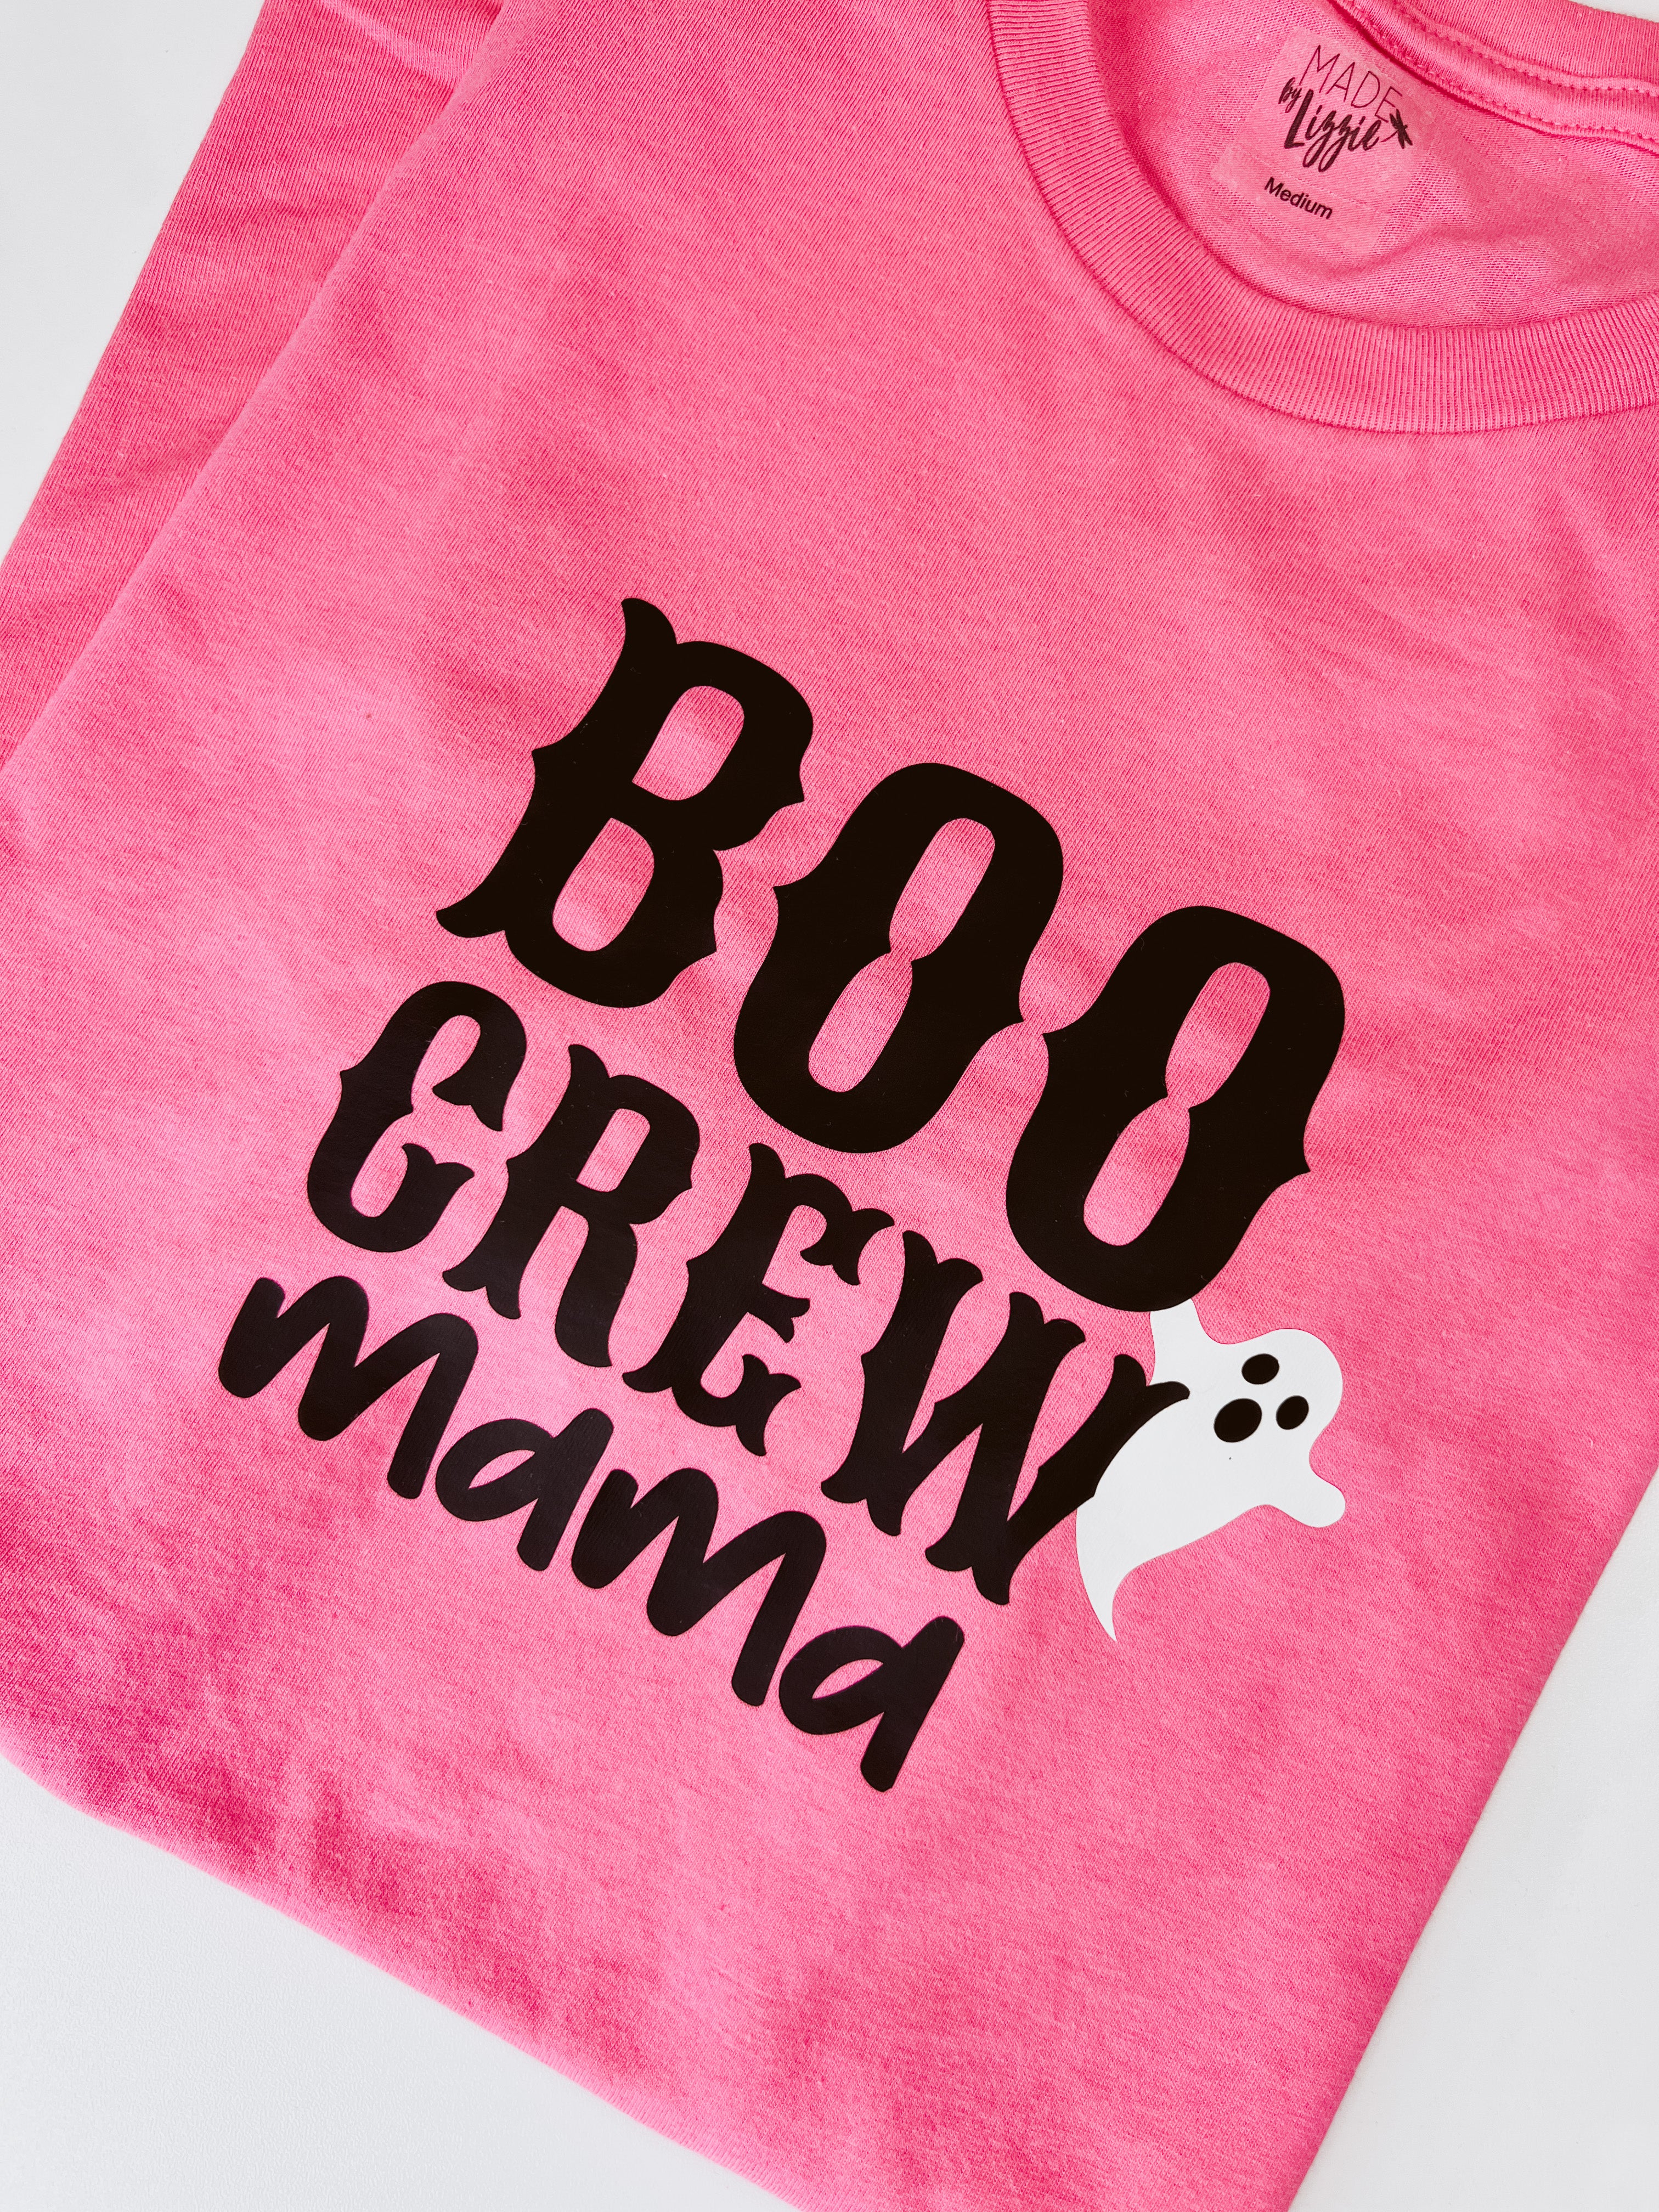 Boo Crew Mama tee